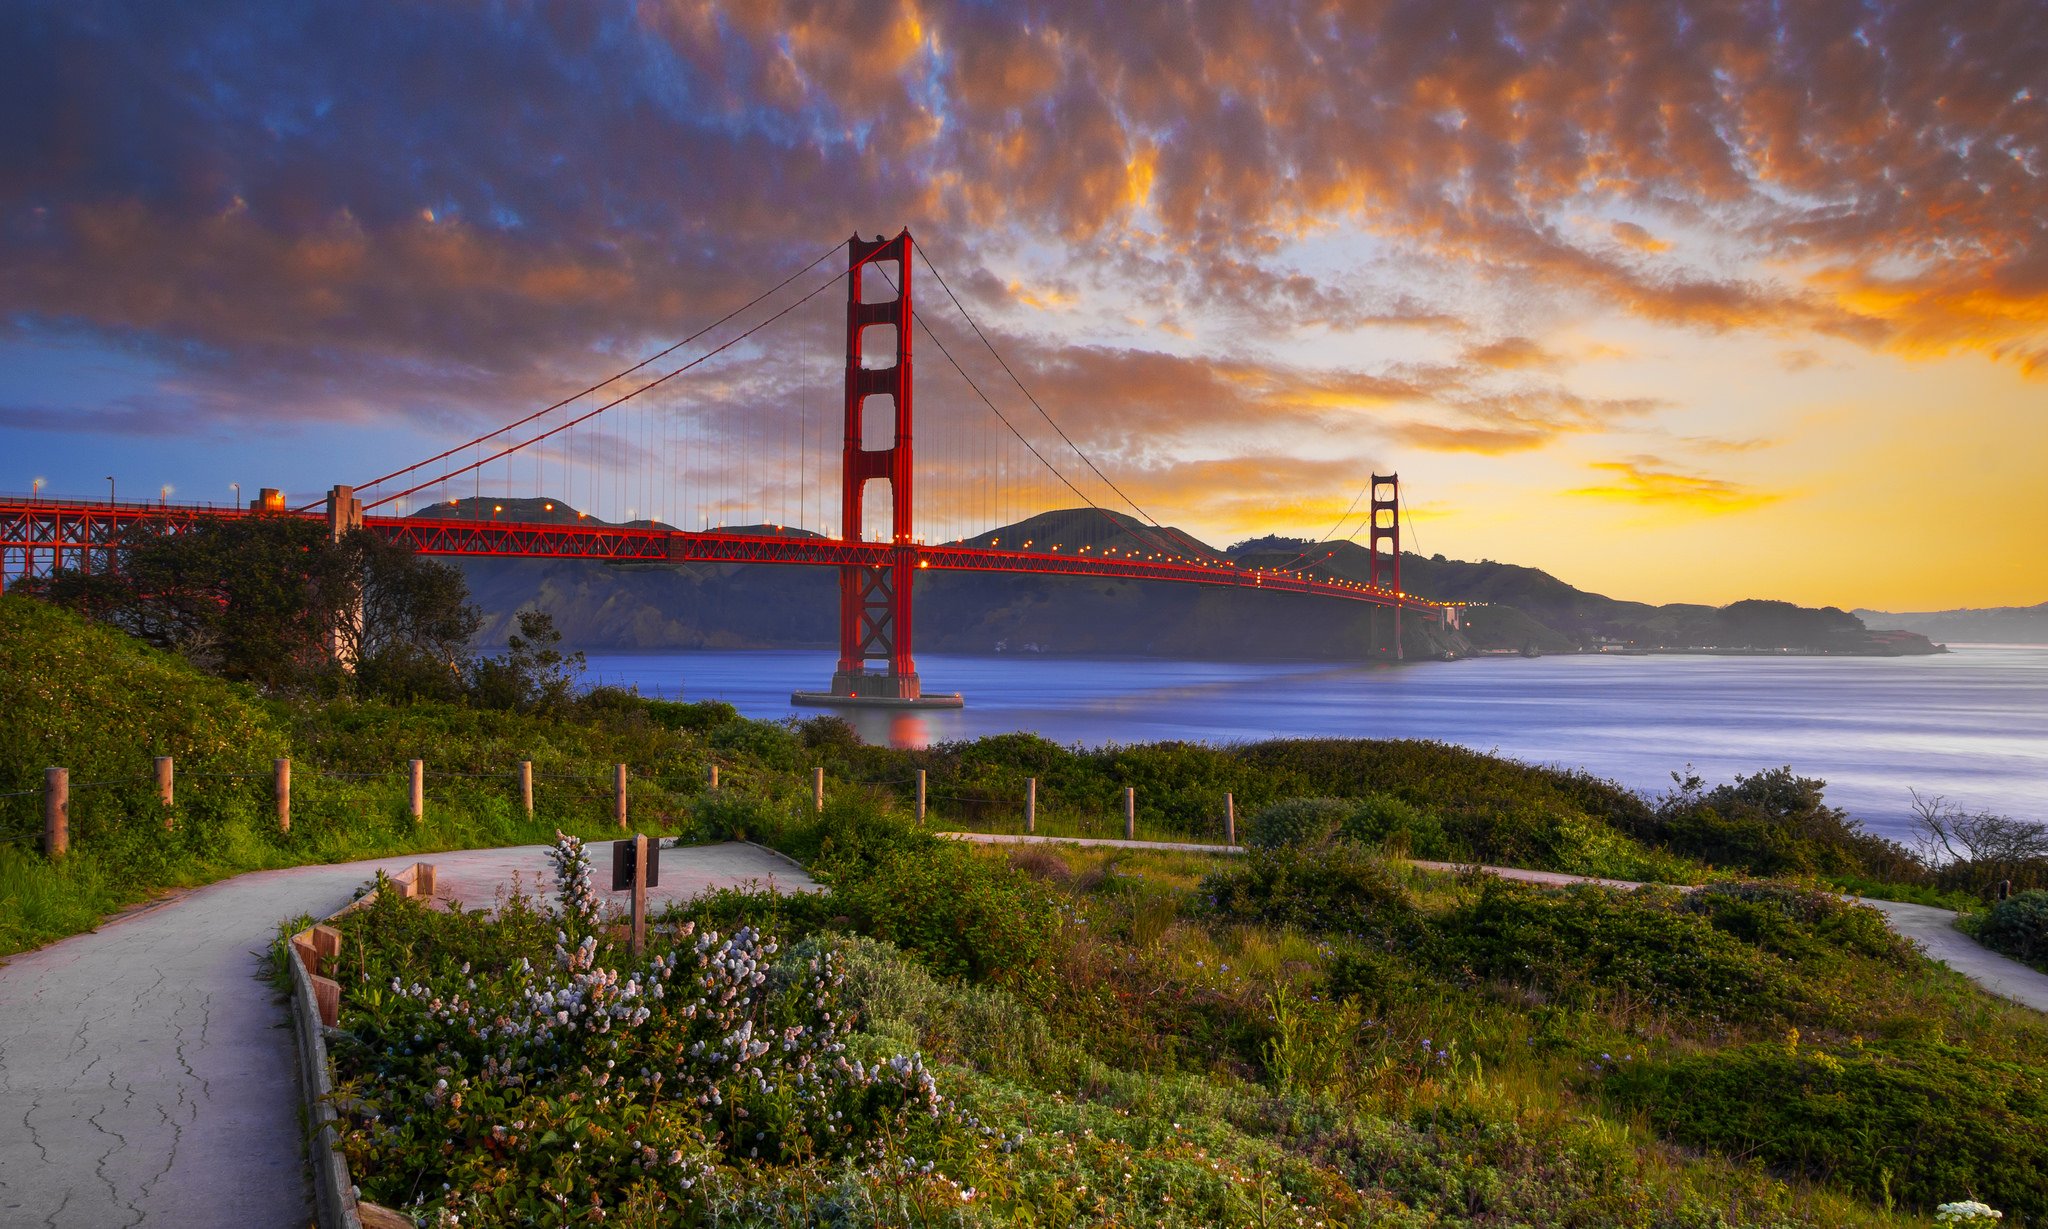 architecture, Bridge, Cities, City, Francisco, Gate, Golden, Night, San, Skyline, California, Usa, Bay, Sea, Bridges Wallpaper